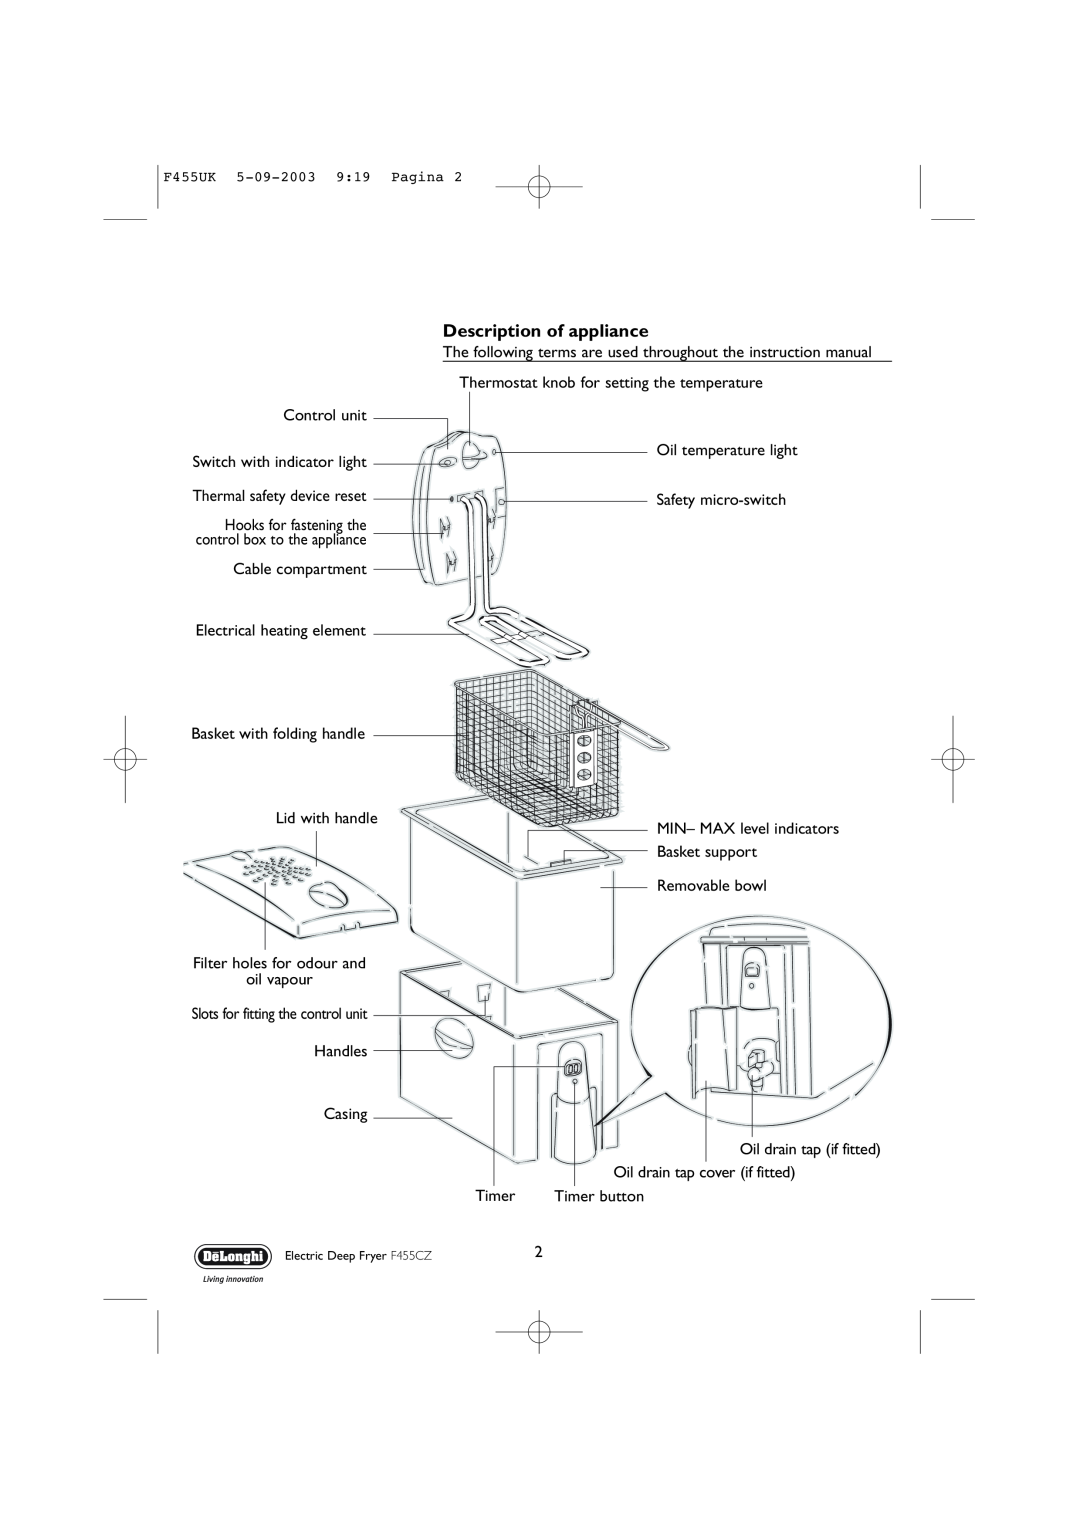 DeLonghi F455 CZ manual Description of appliance 